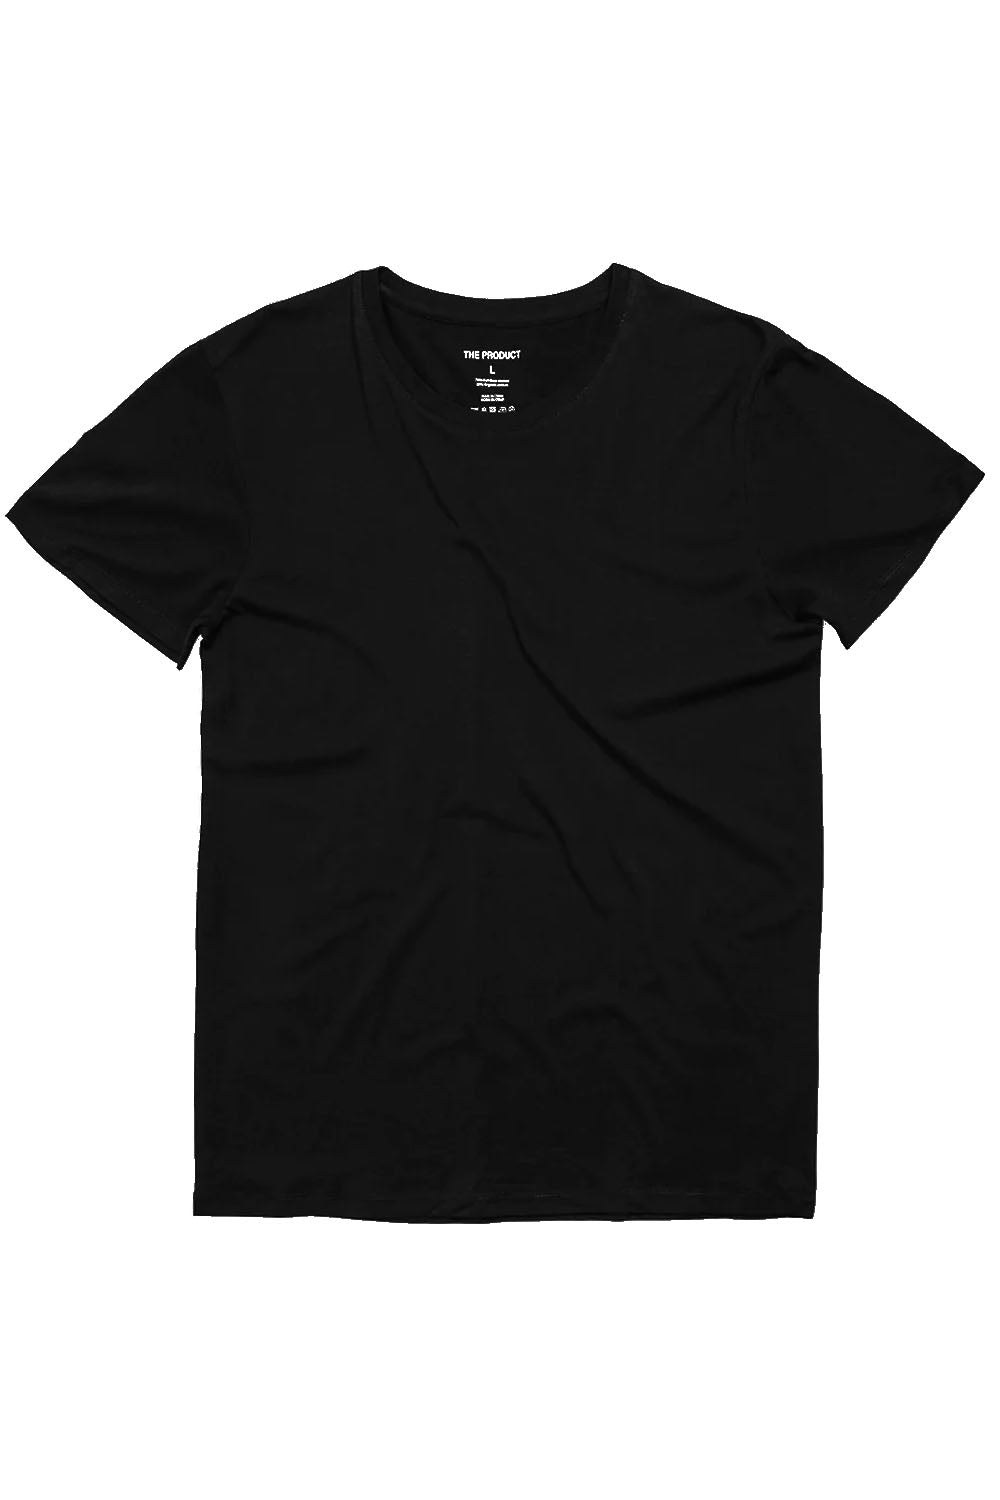 Unisex T-Shirt Black